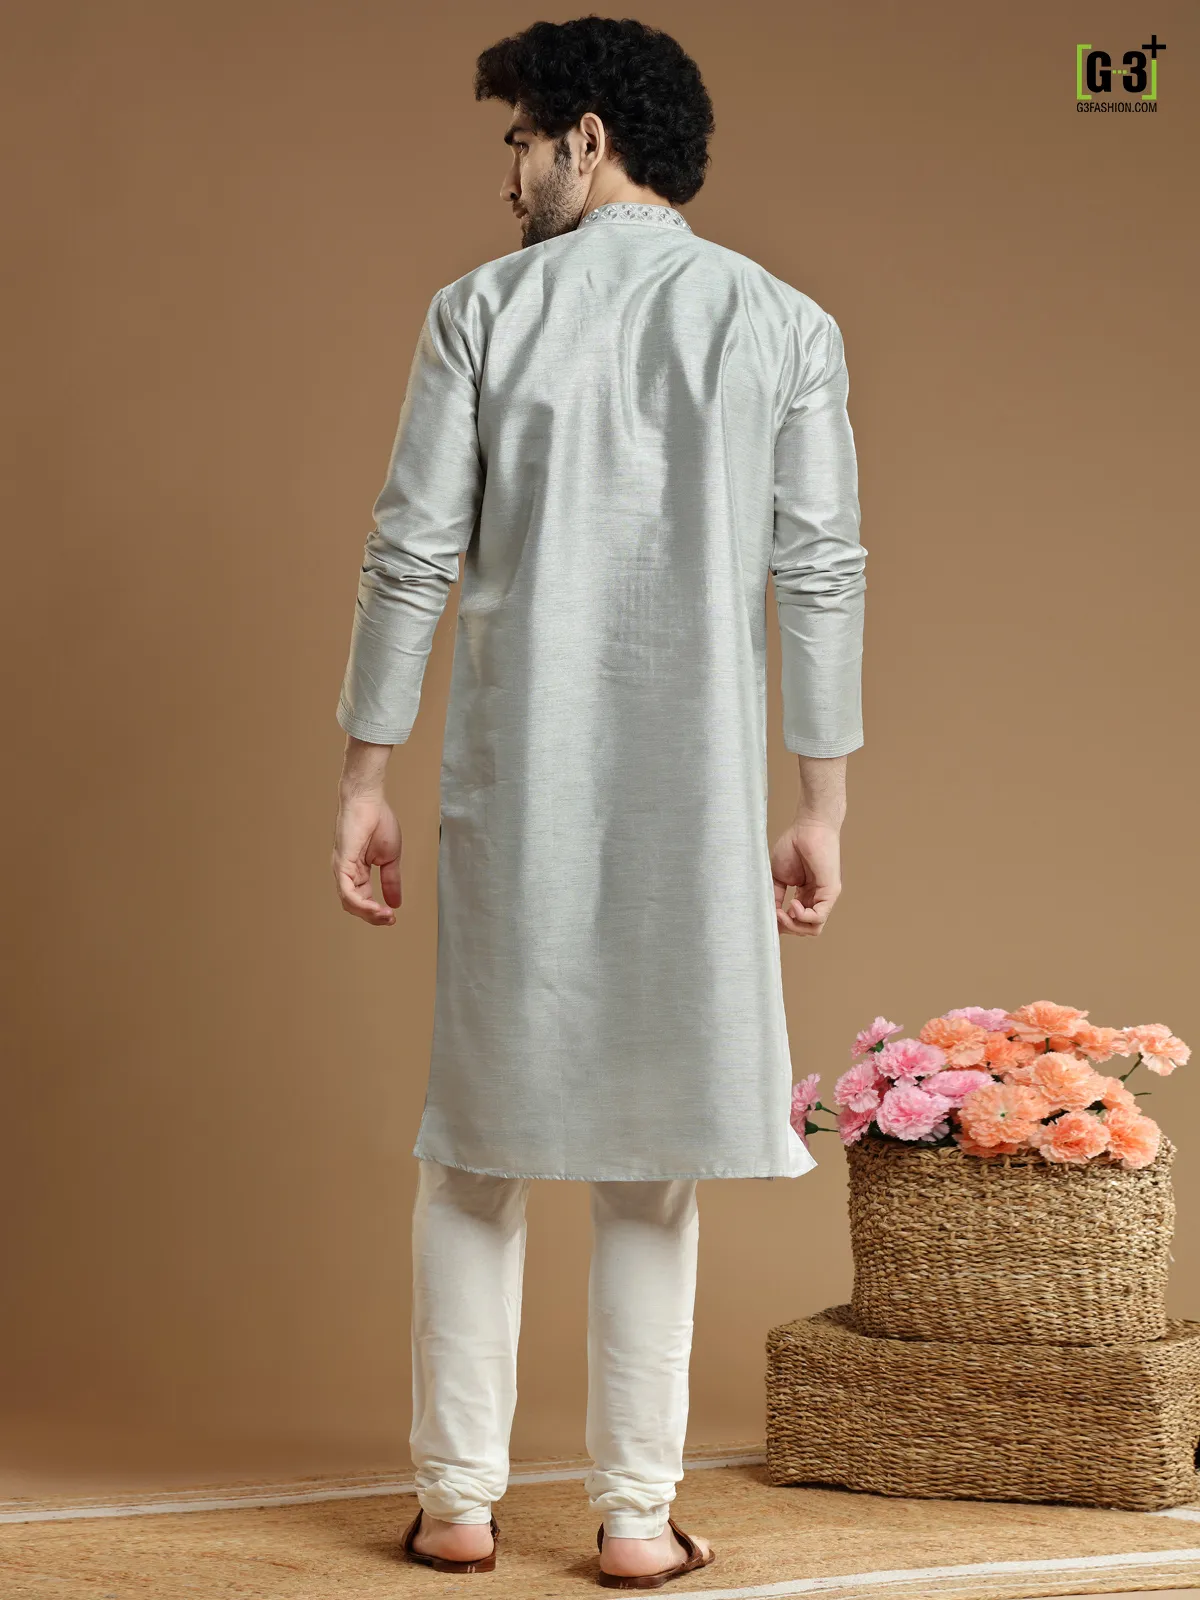 Grey color silk fabric kurta suit for festivals